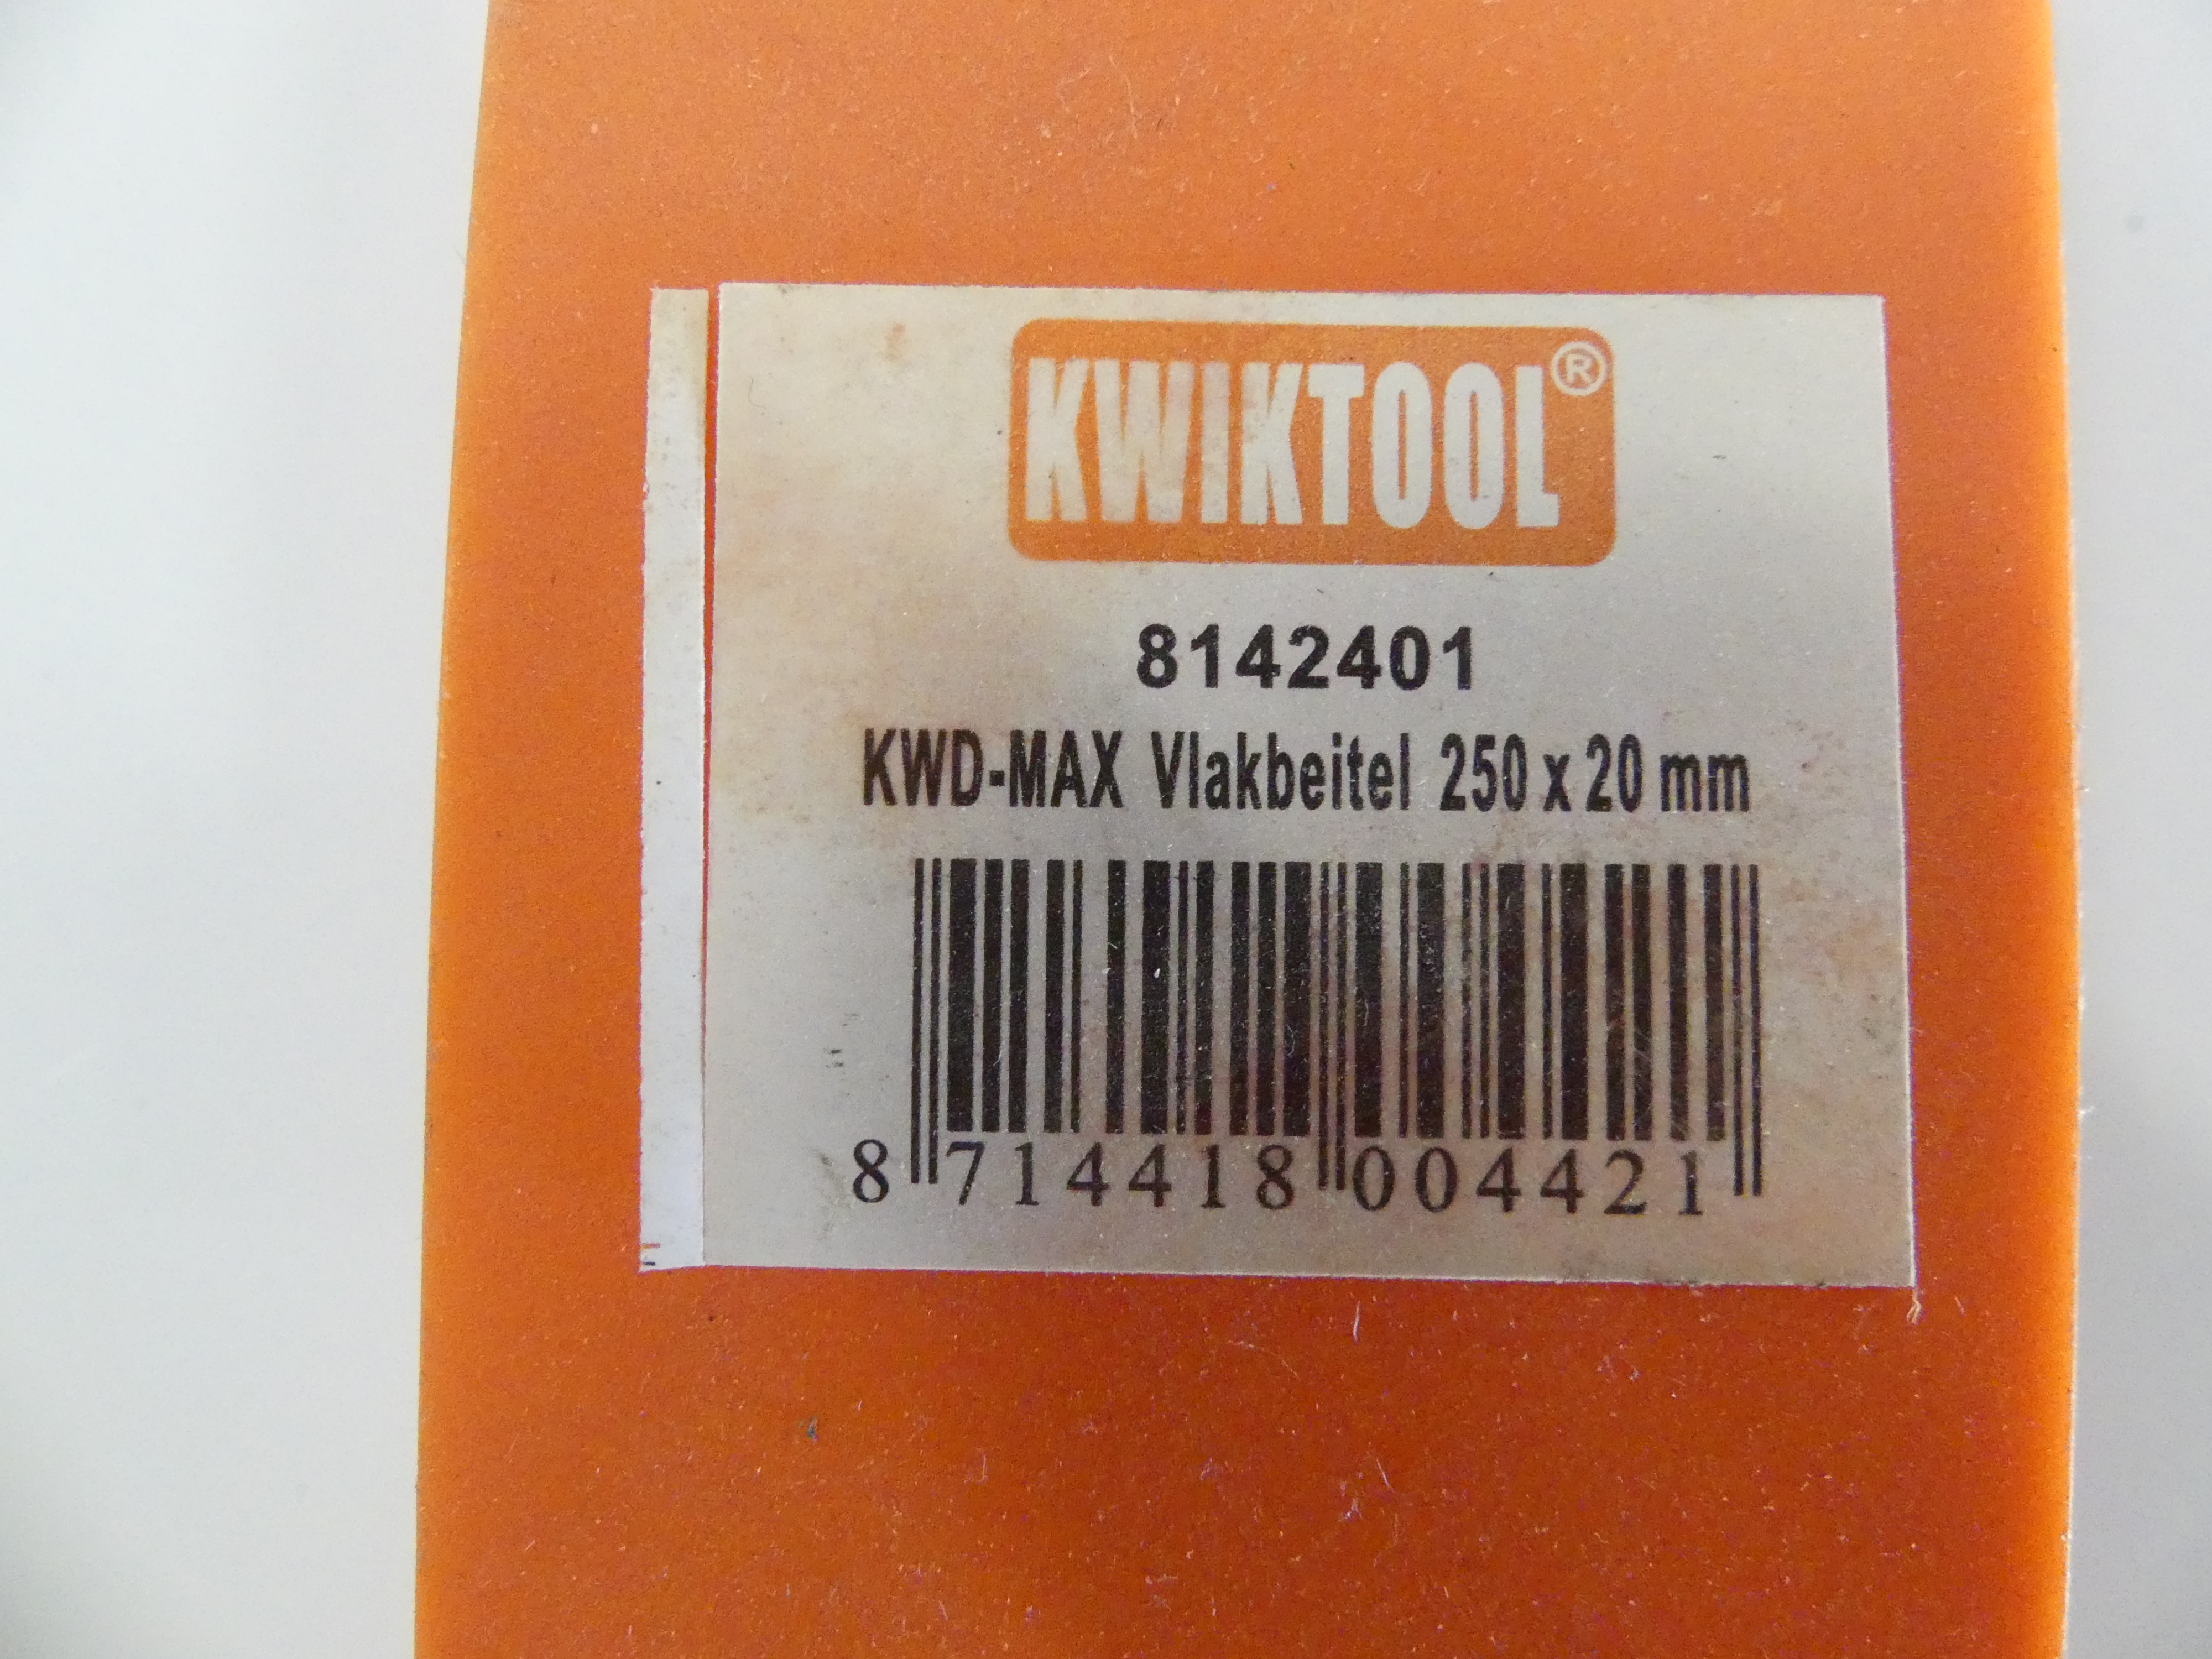 10x Kwiktool KWD-MAX vlakbeitel 250x20mm     